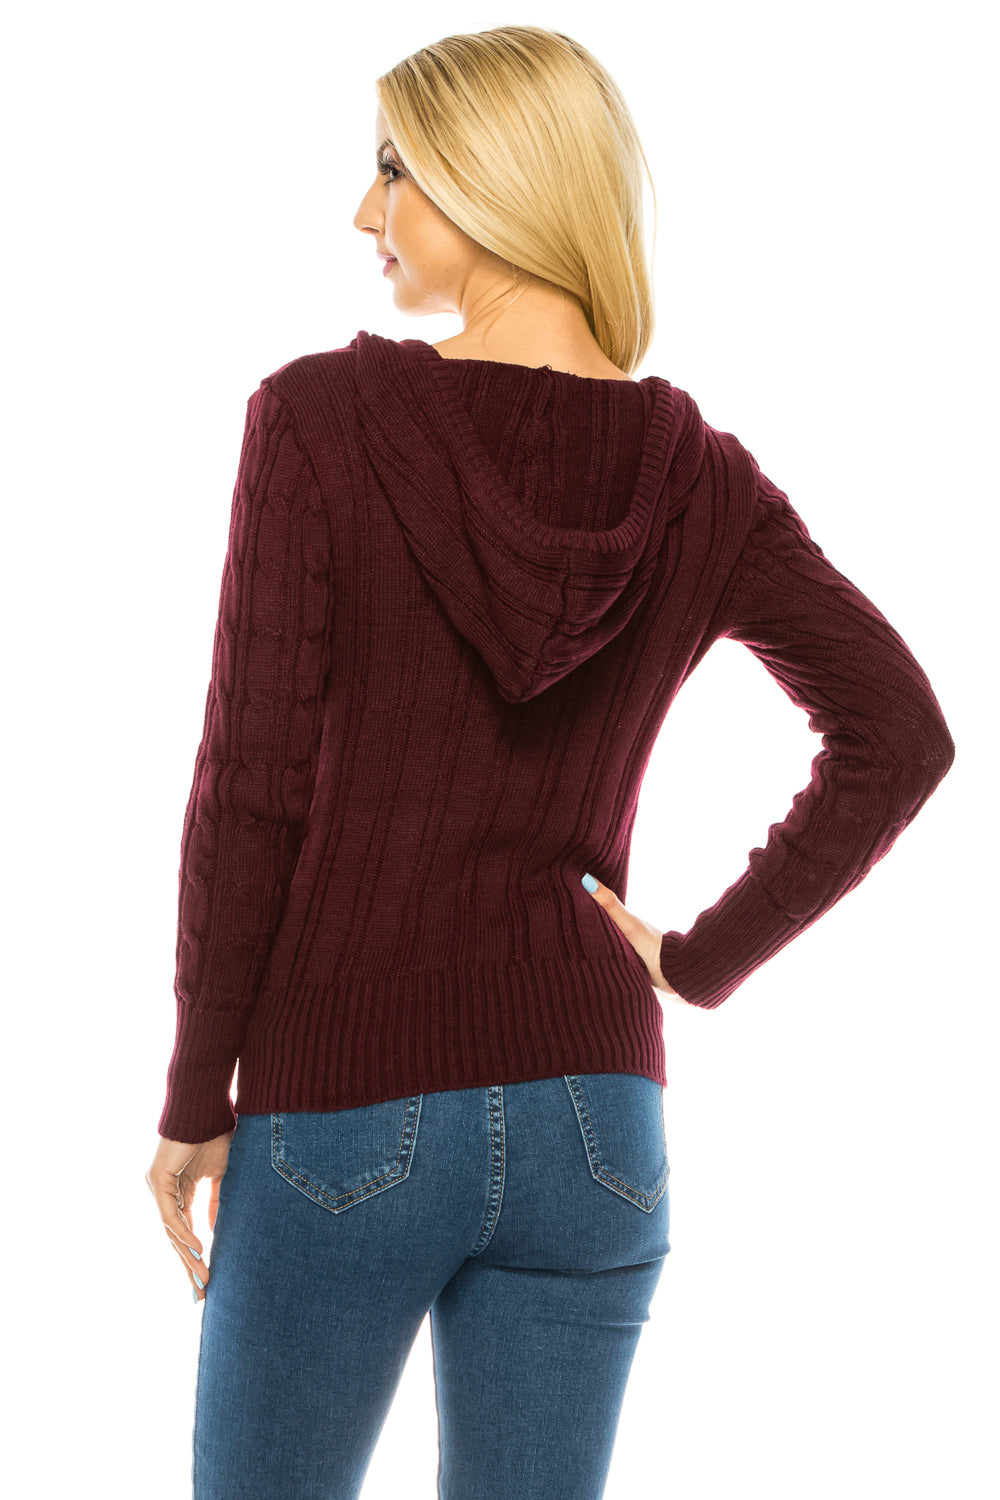 Women's Long Sleeve Sweater With Hoodie - annva-usa